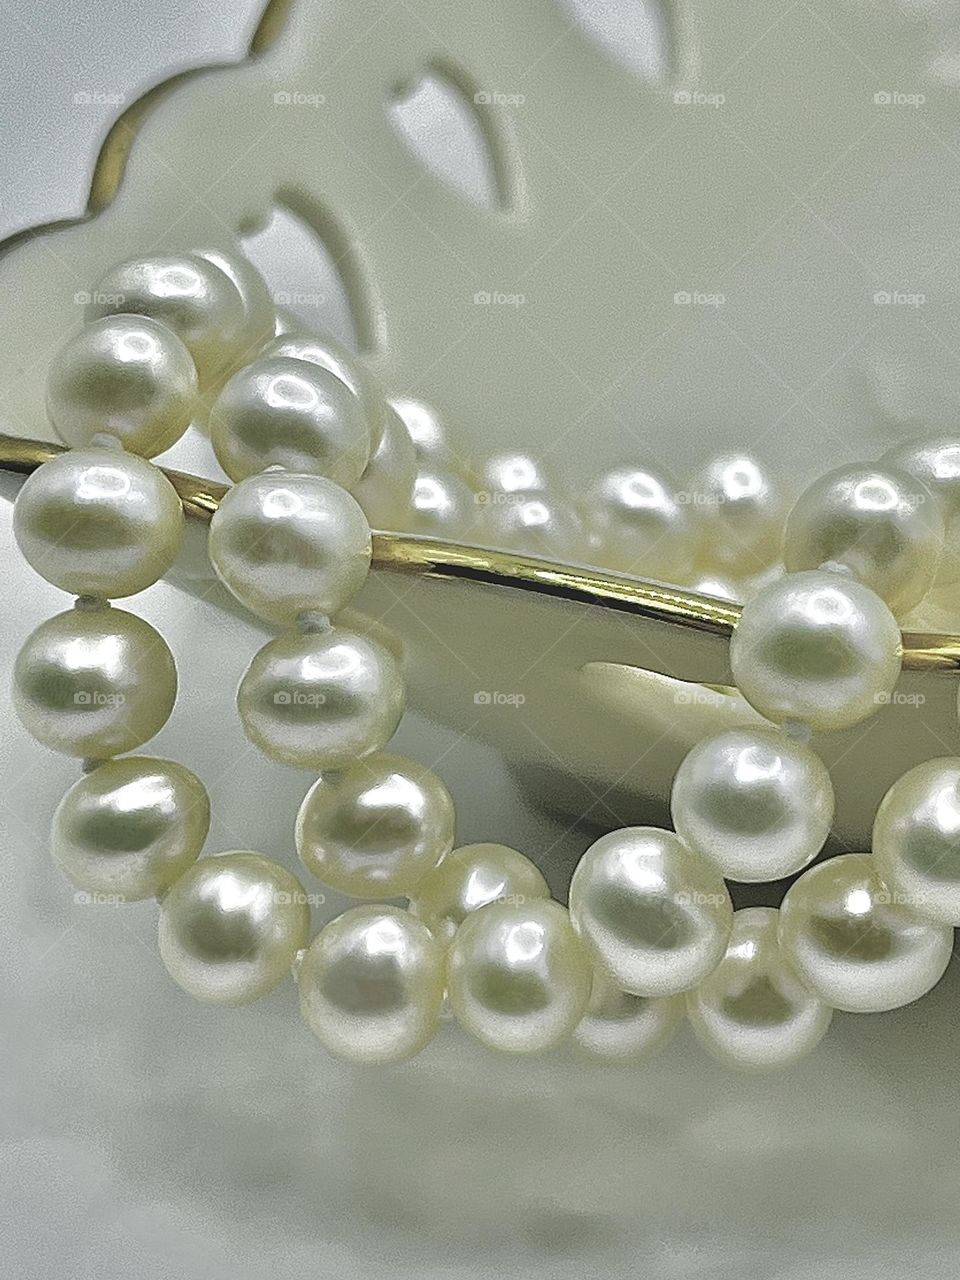 Pearls in Lenox Heart Dish